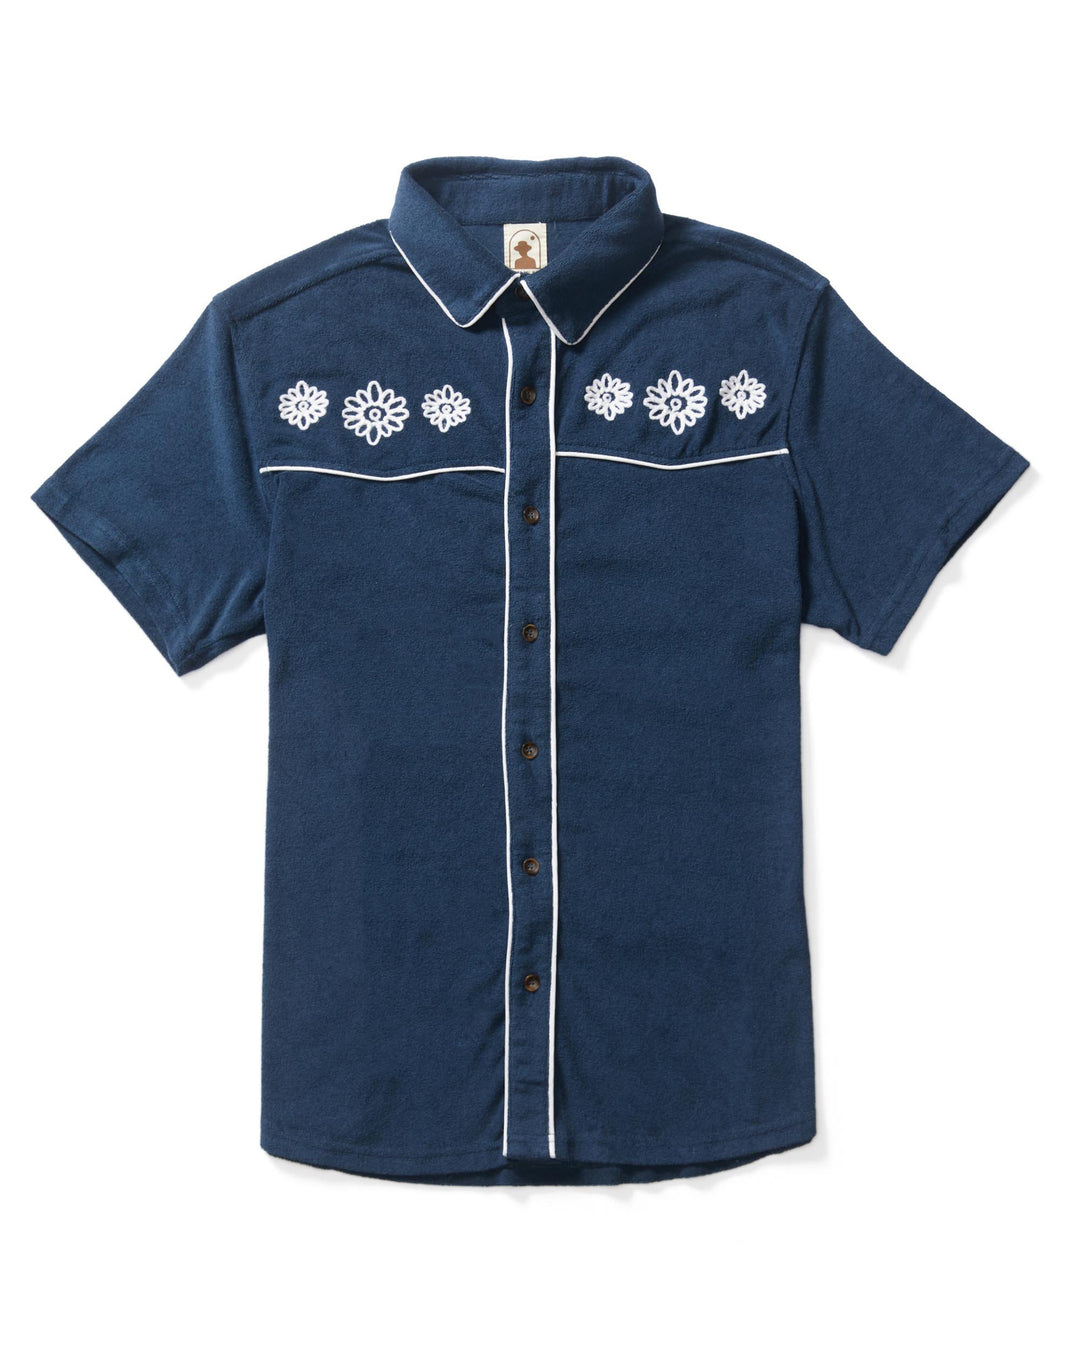 The Gaucho Terry Cloth Shirt - Vintage Navy